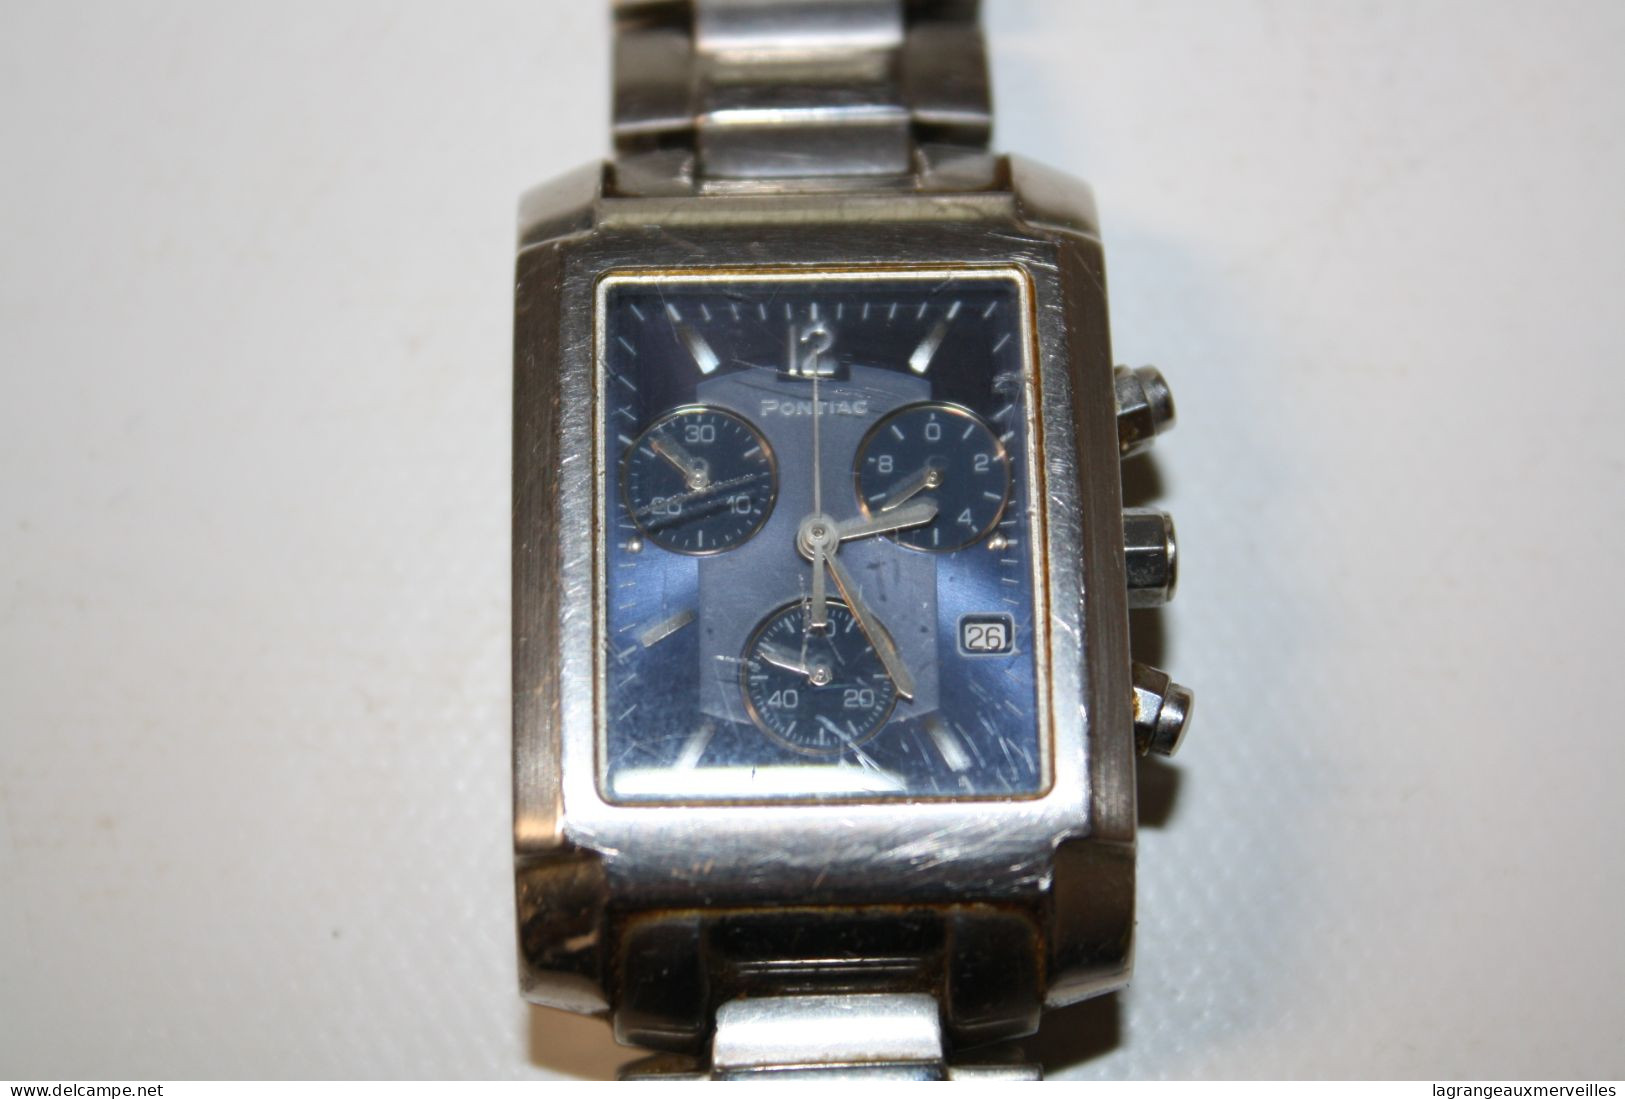 C290 Ancienne Montre PONTIAC - Boite Origine - Antike Uhren